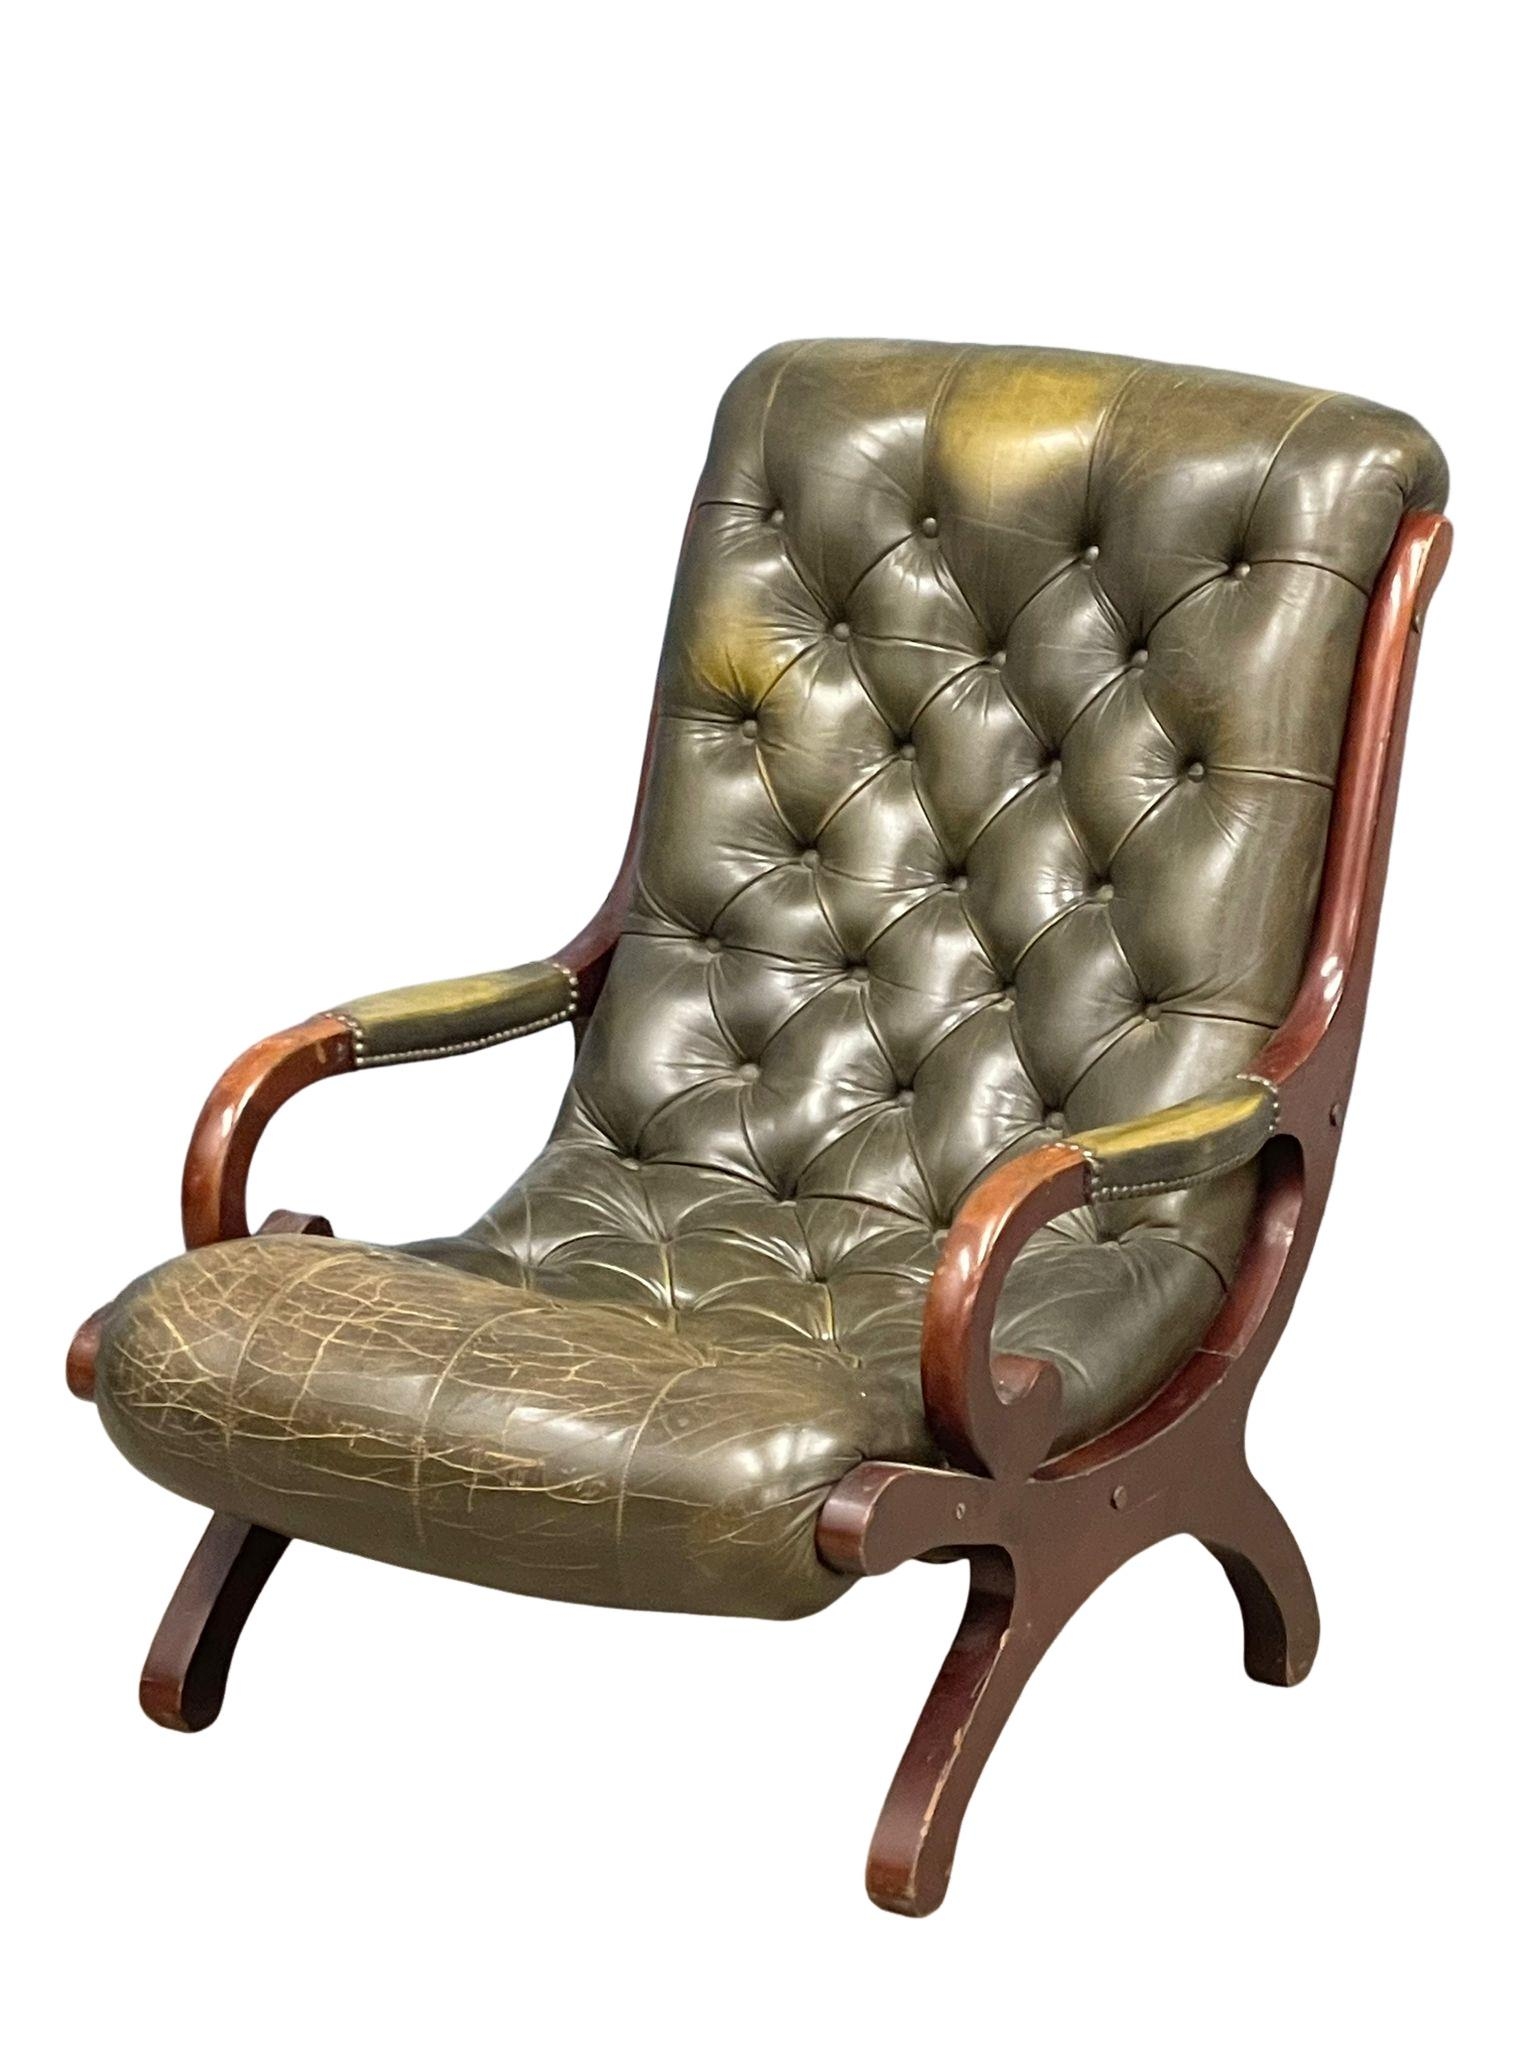 A Regency style deep button leather armchair.